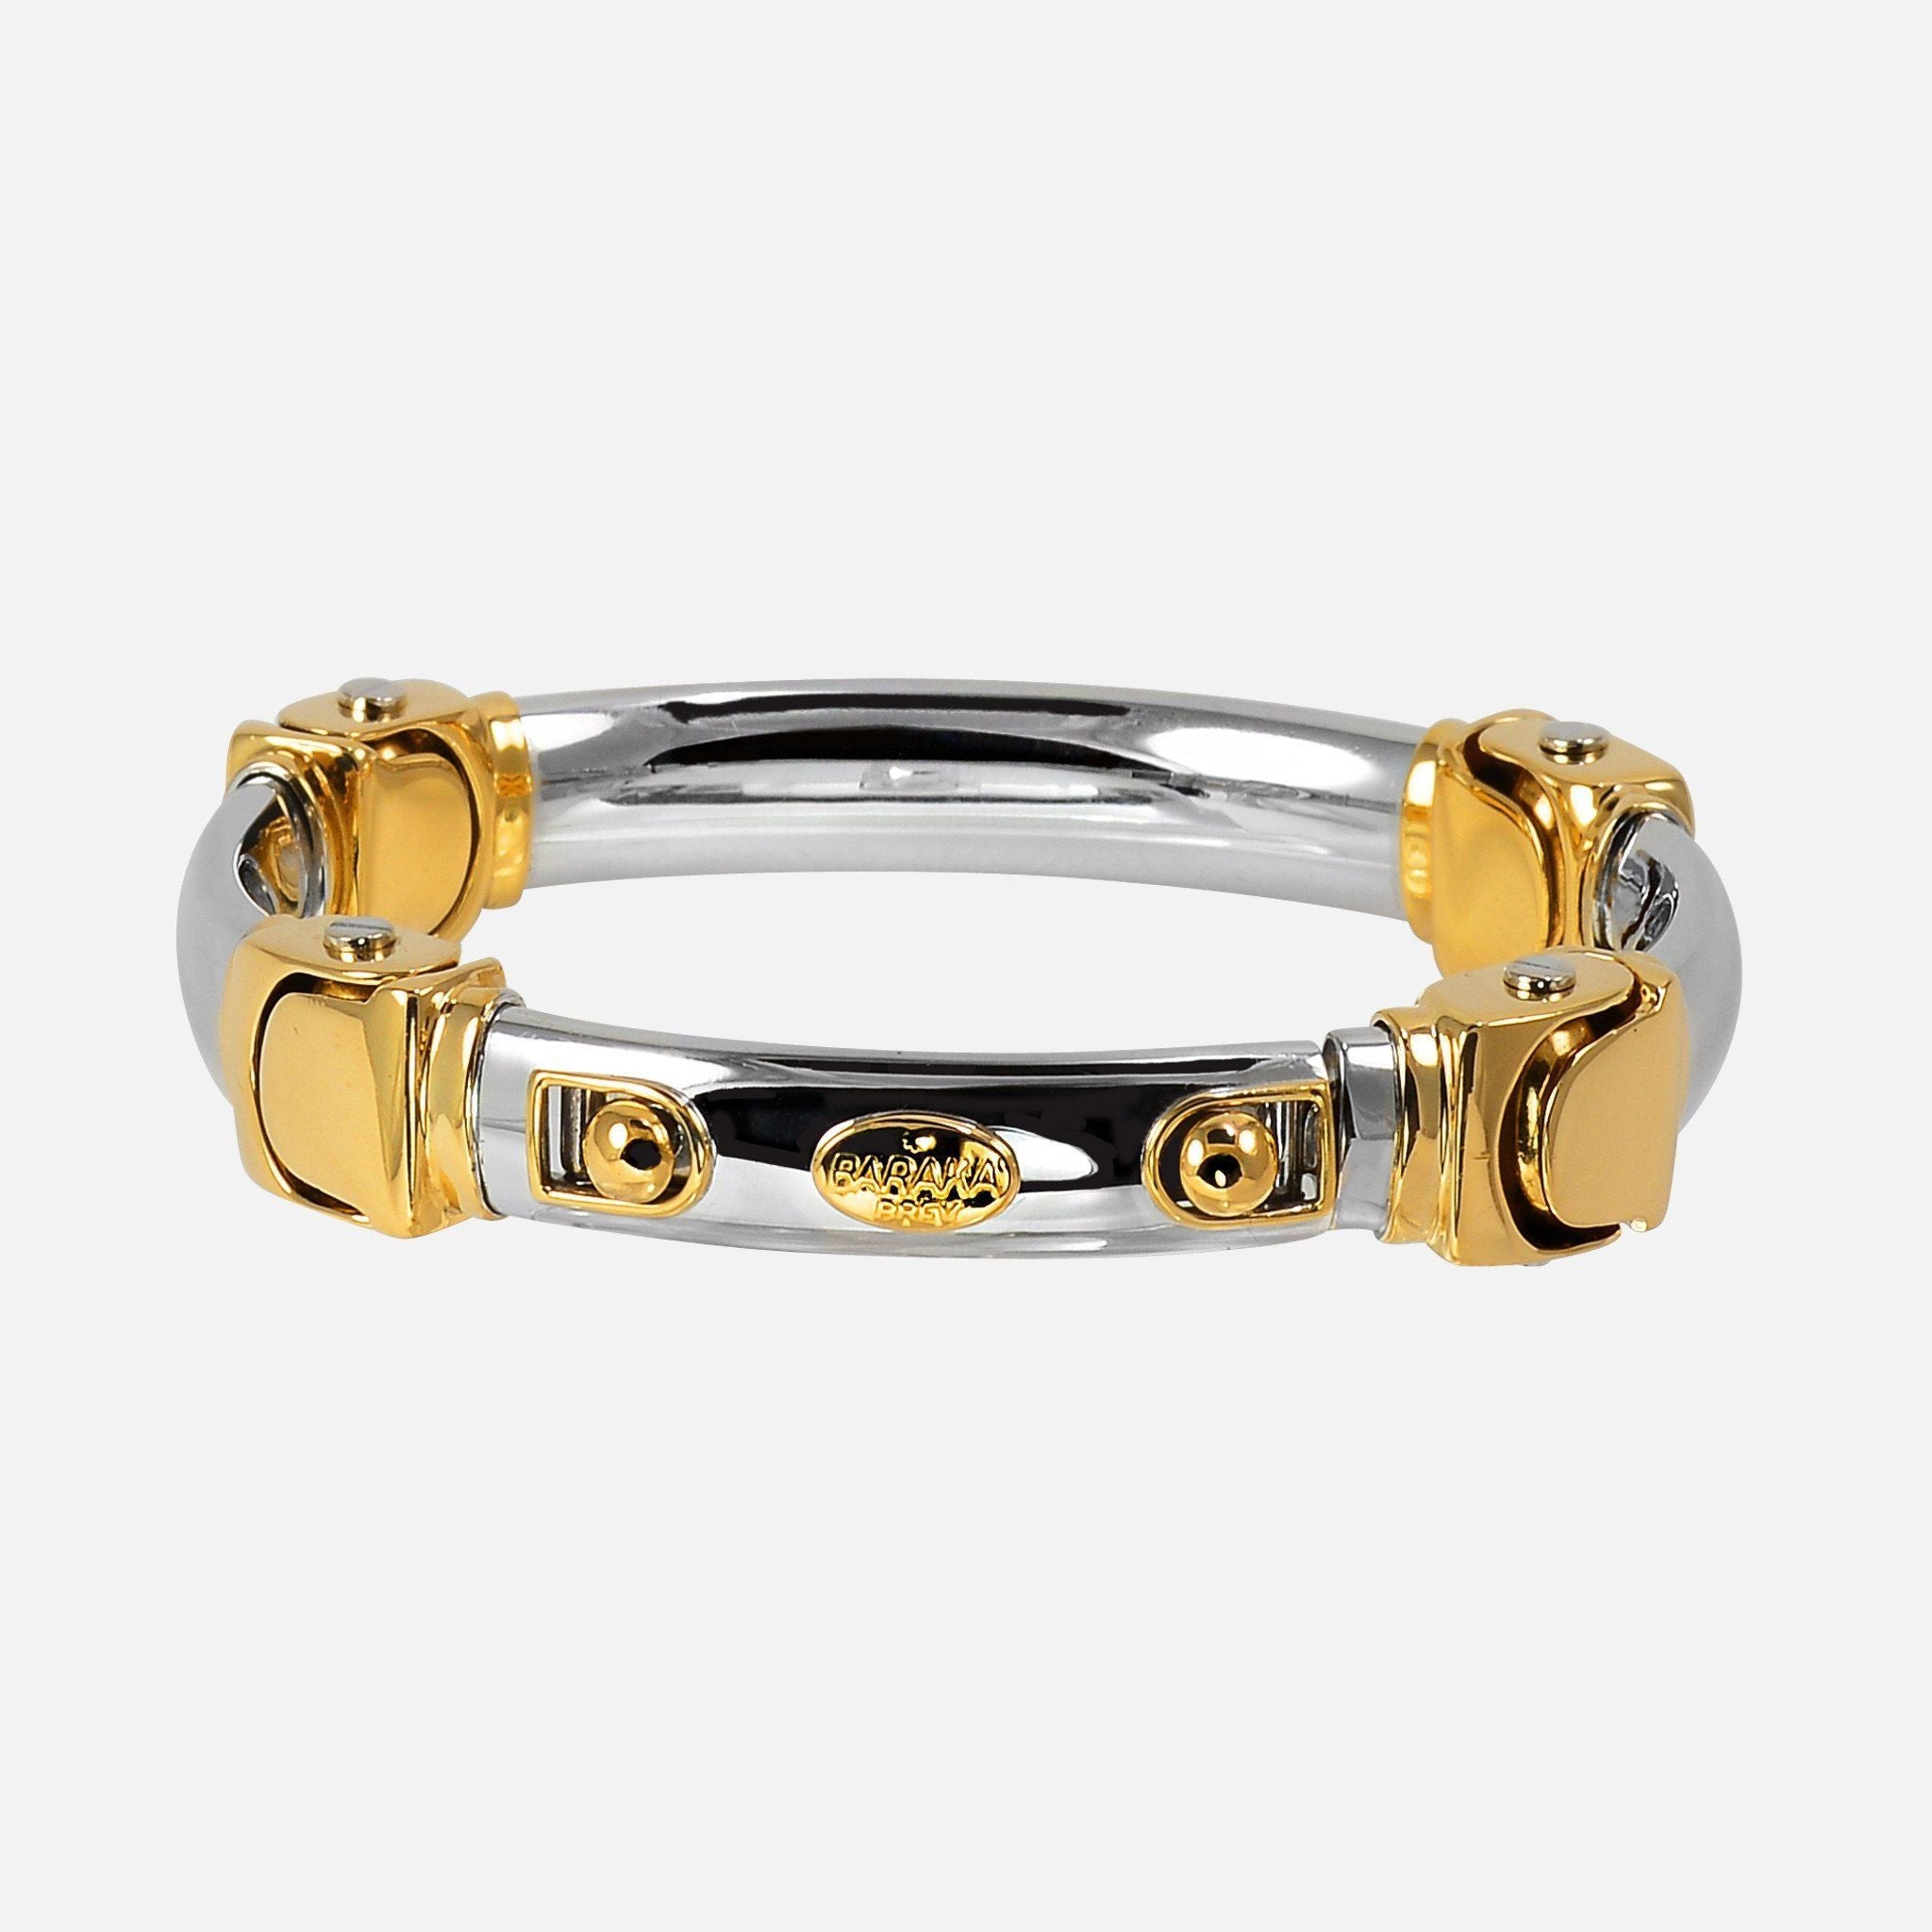 Baraka 316L Bracelet BR312851ROAC-02 - 21 cm | Stainless steel bracelet,  Bracelet sizes, Baraka jewelry